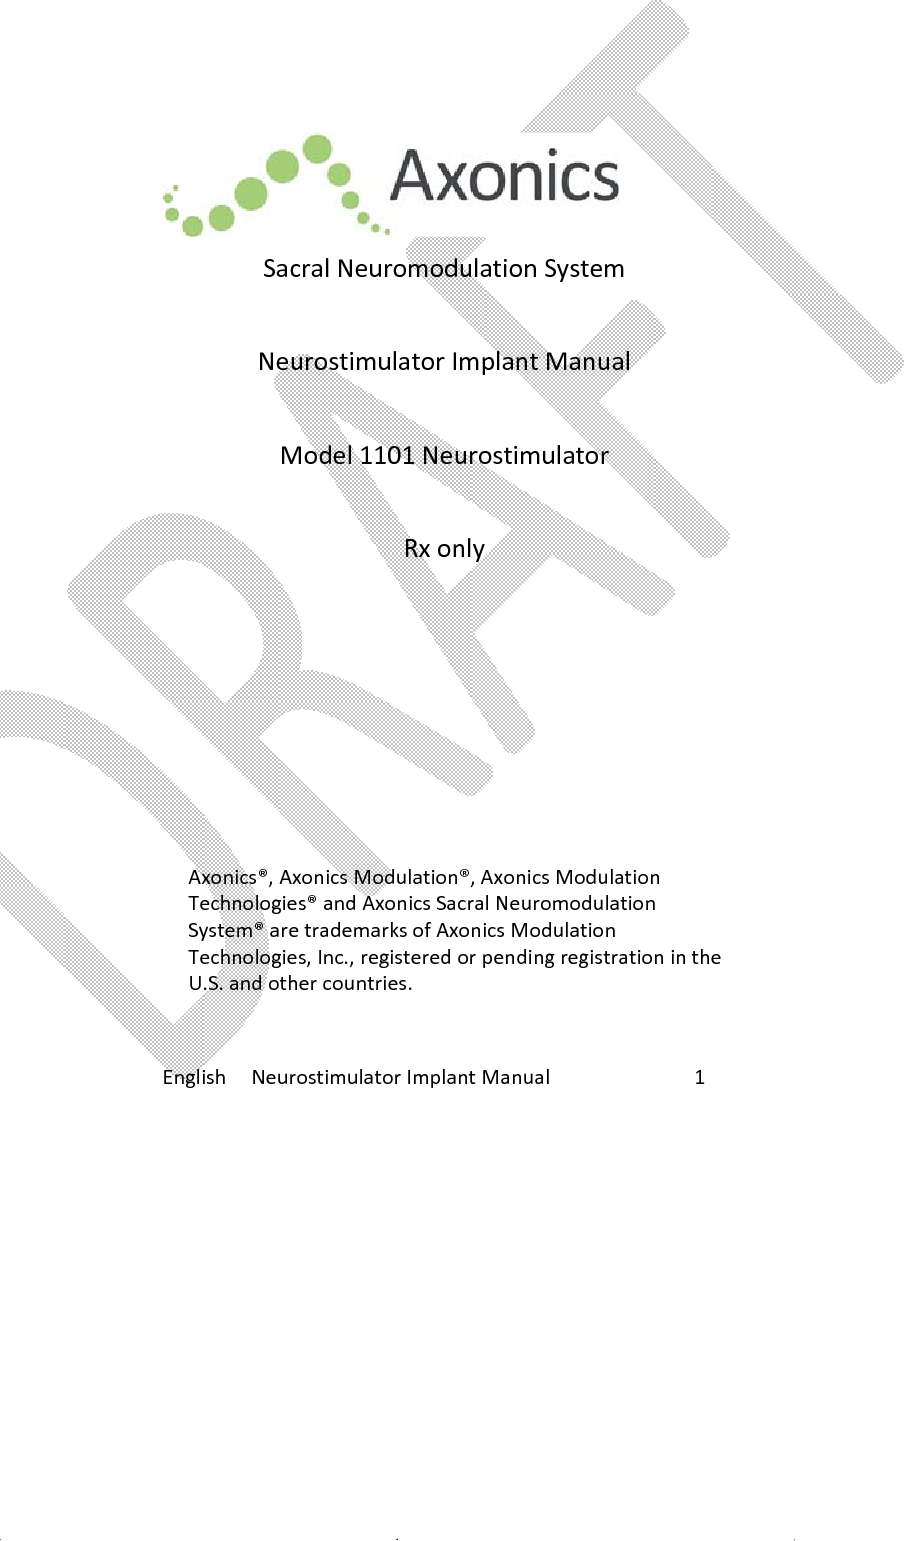 Axonics Modulation Technologies X 1101 User Manual manual IPGx